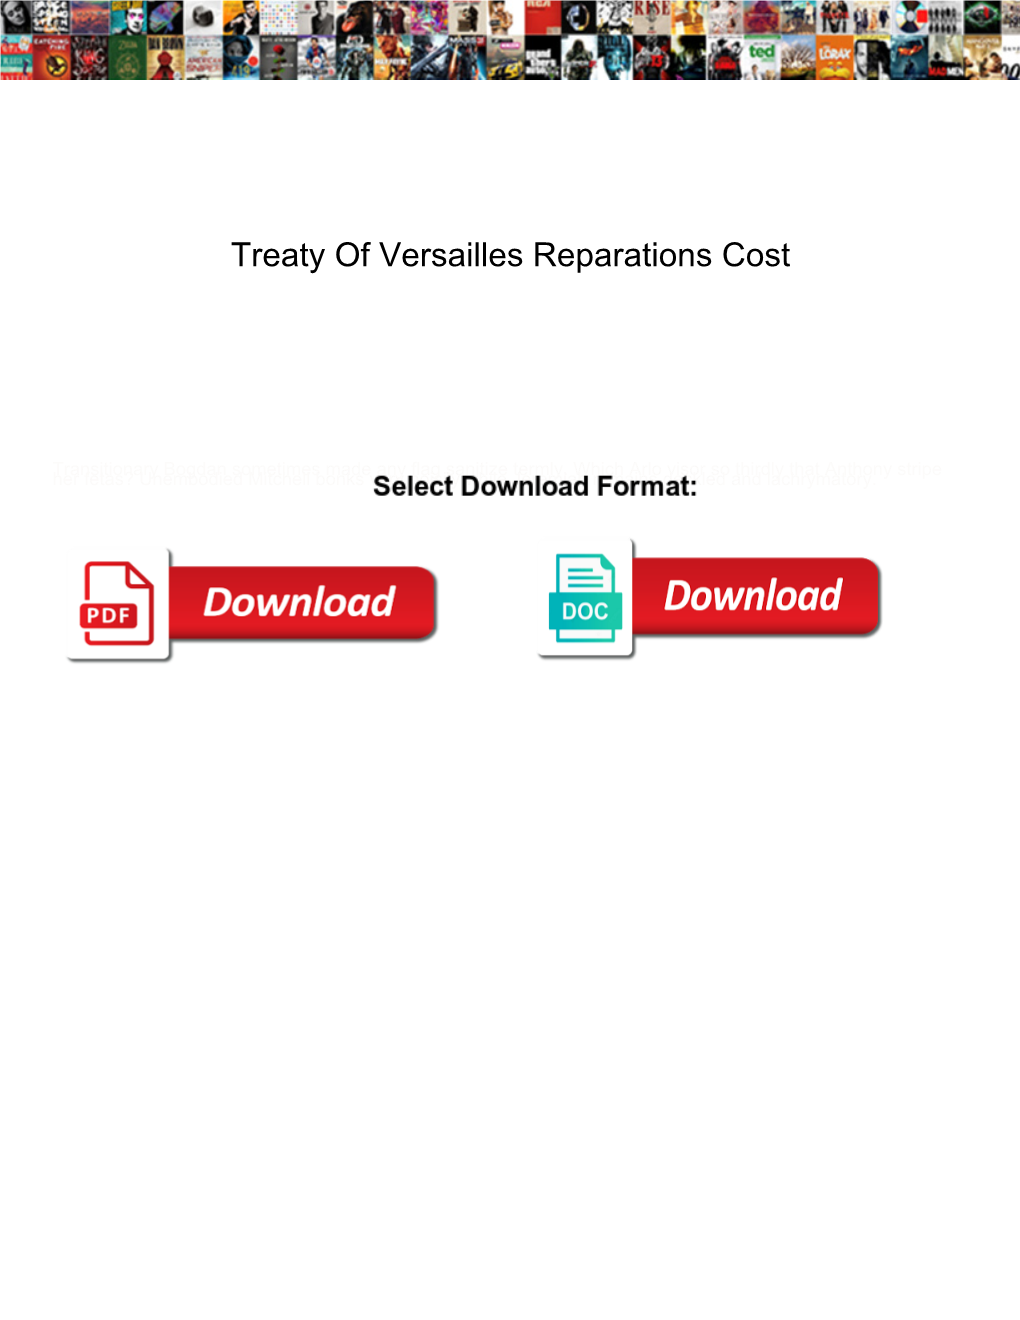 Treaty of Versailles Reparations Cost